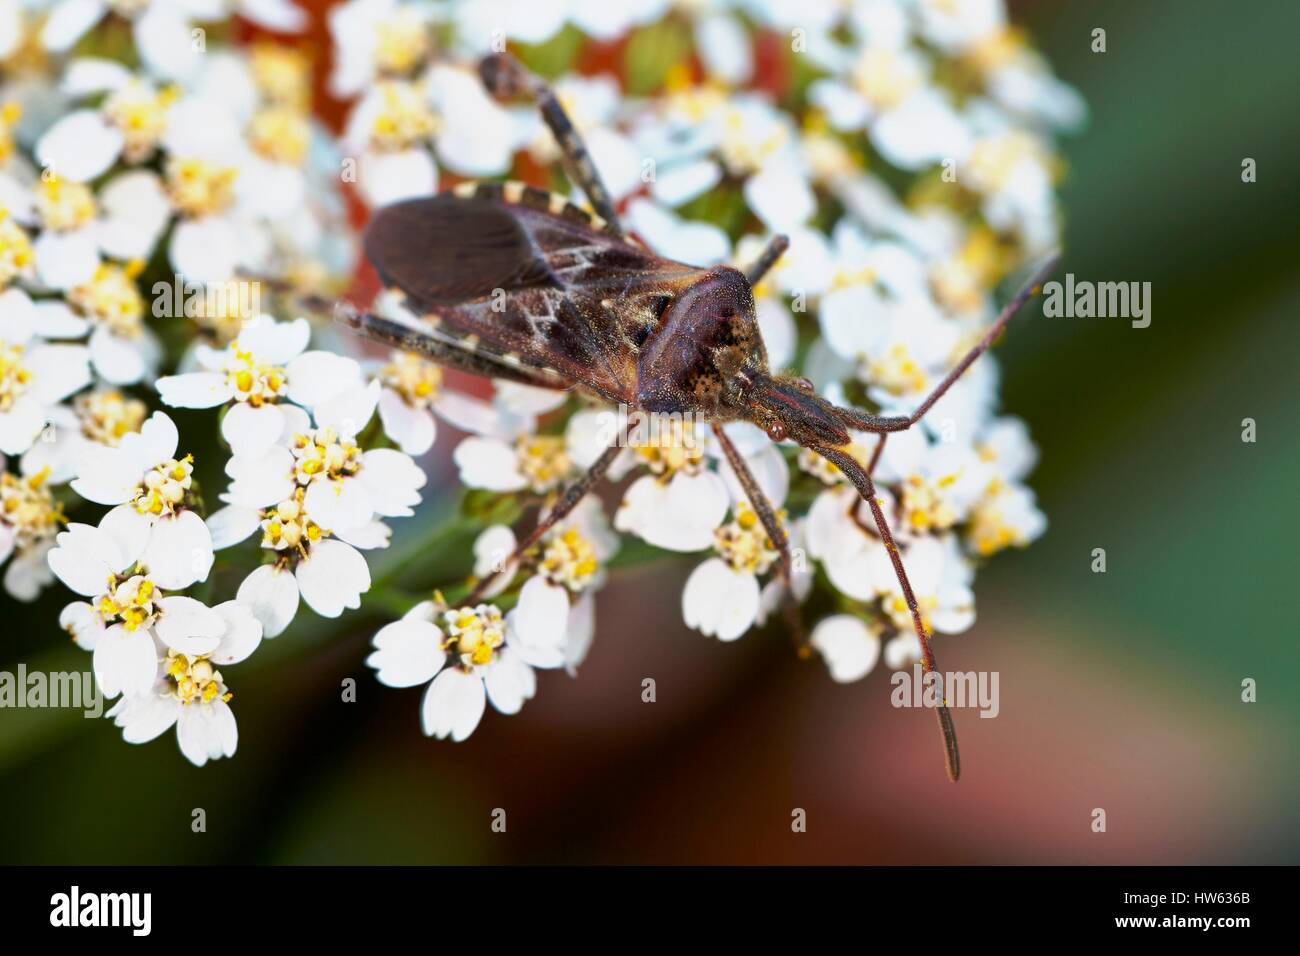 France, Morbihan, Hemiptera, Coreidae, Western conifer seed bug or Leaf-footed bug (Leptoglossus occidentalis) Stock Photo